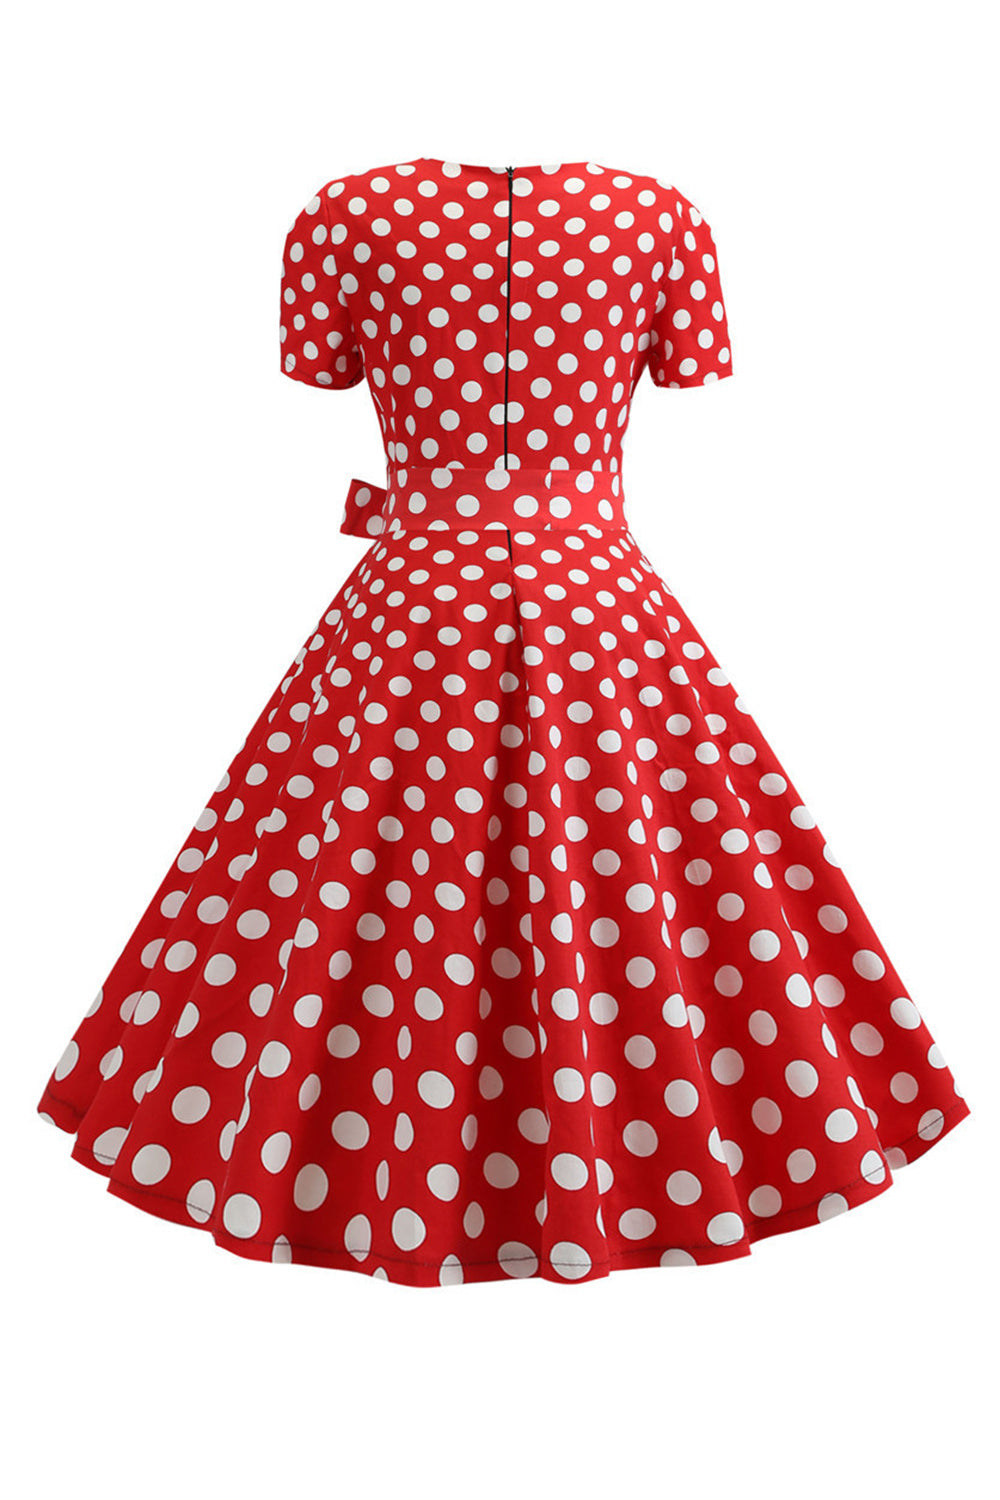 Polka Dots Short Sleeves Red 1950s Swing Dress